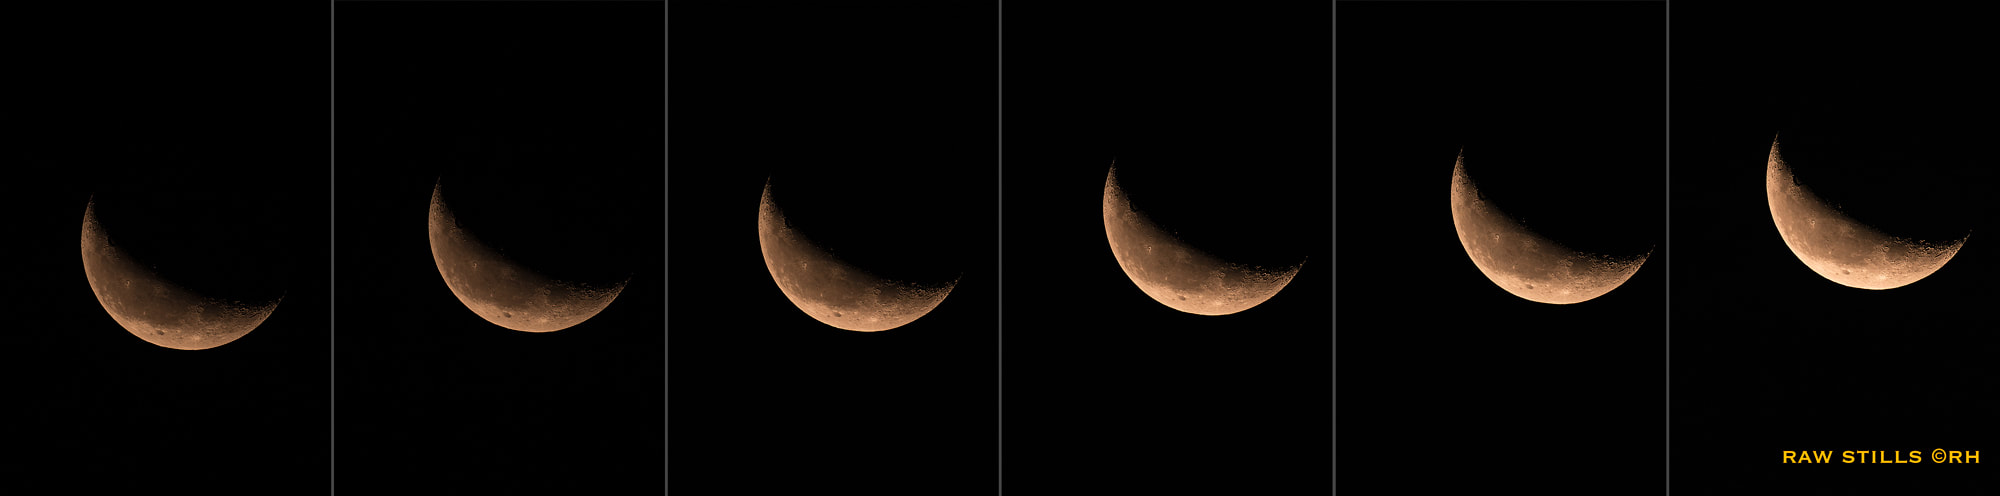 RAW Nef stills. DSLR lunar snaps by Rick Hemi